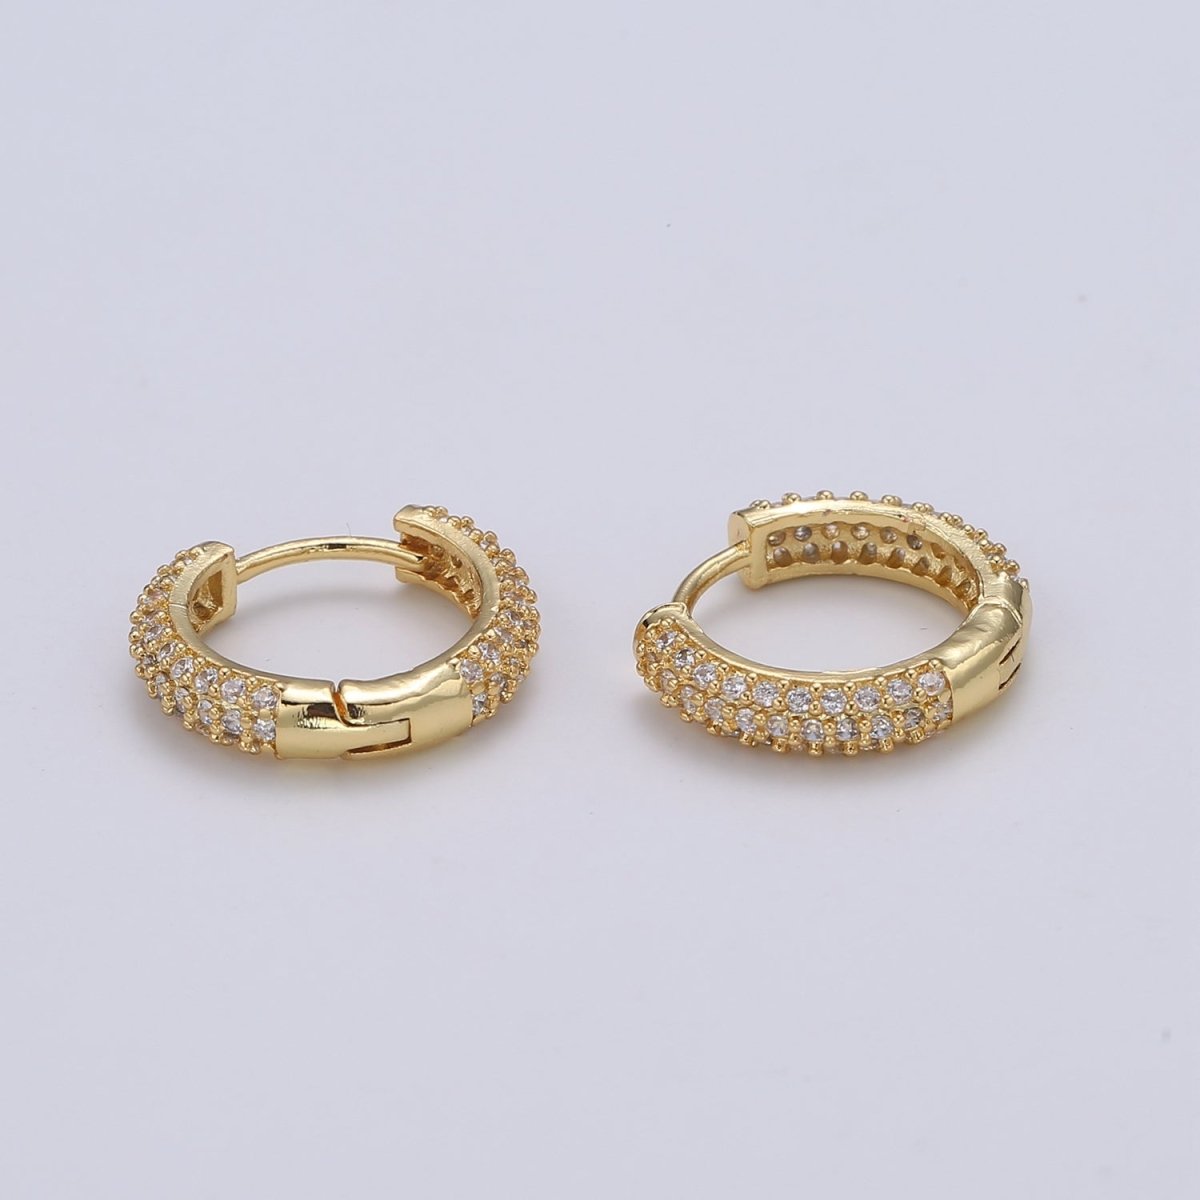 1 pair Hoops - Black, Blue, Clear, Red, Green, Multi-color Zirconia or Teal Gold CZ earrings - 24K Gold Huggie hoops EARRING-1412 - 1418 Q-434 - Q-440 - DLUXCA